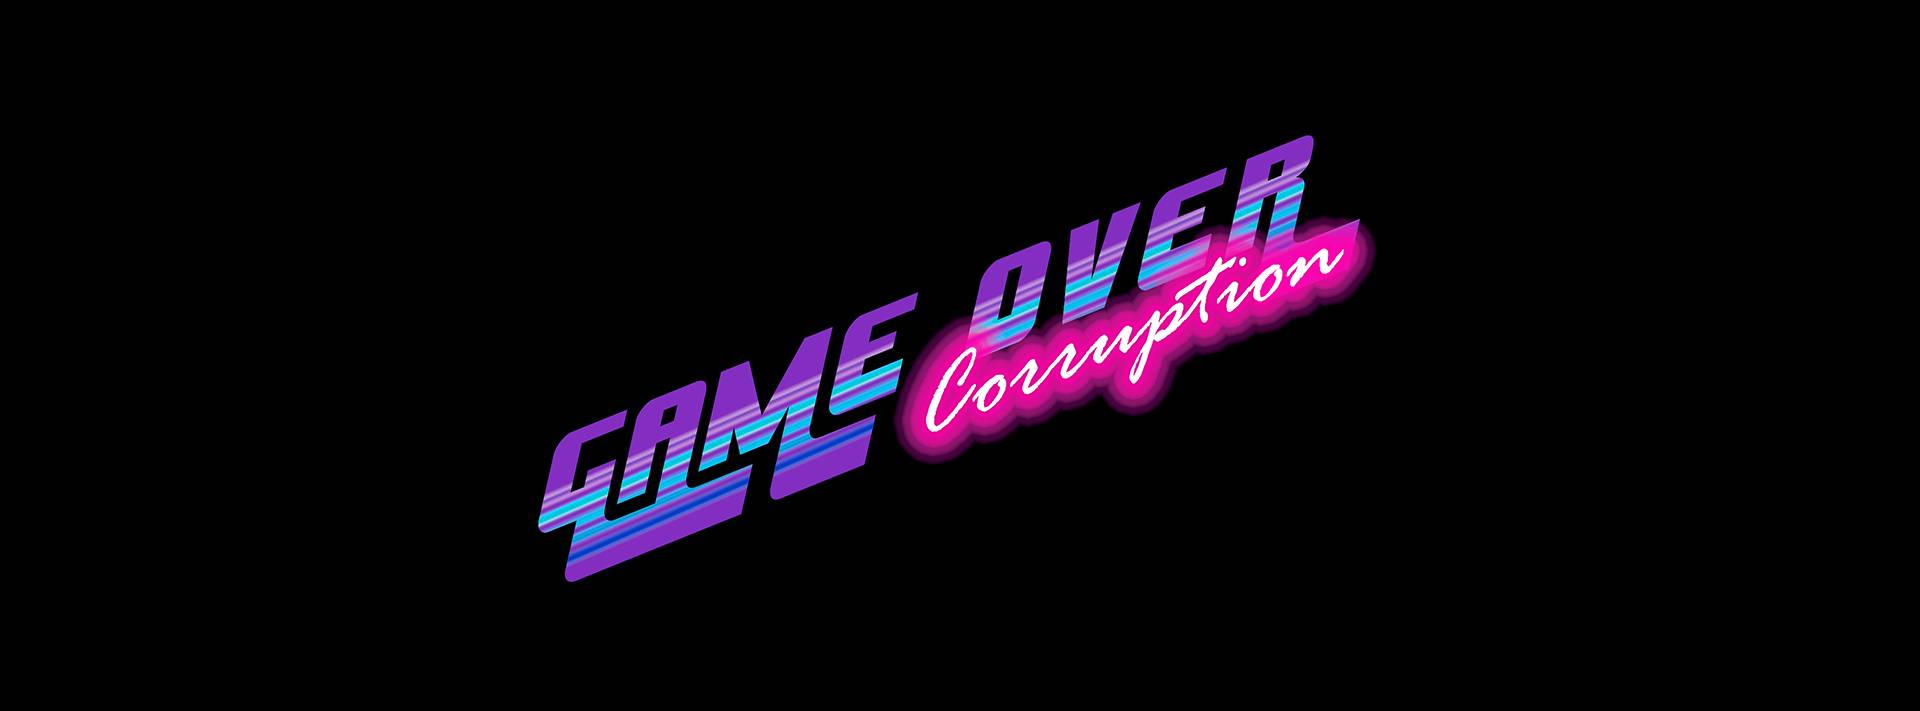 Fillon gara “Game Over Corruption”